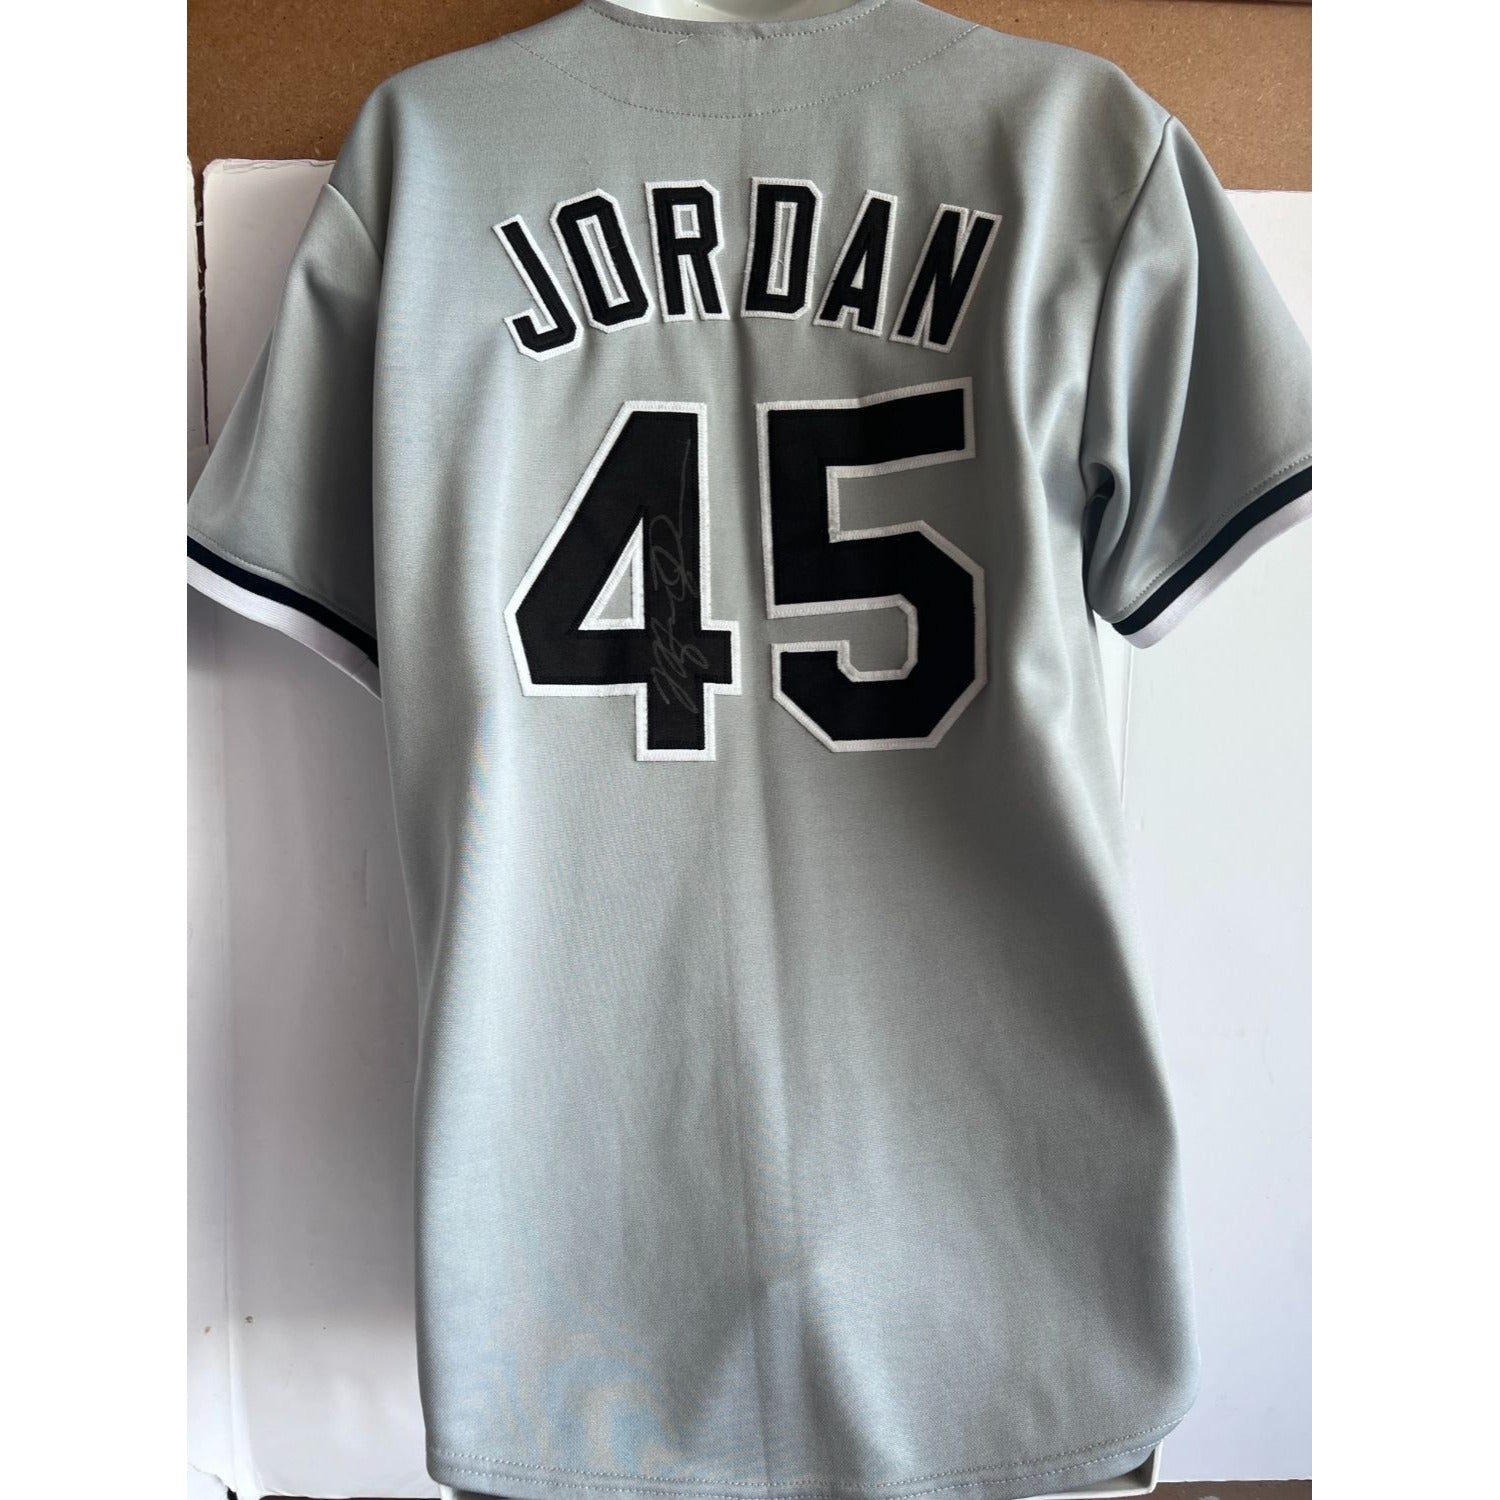 Michael Jordan Birmingham Barons signed jersey gray with proof